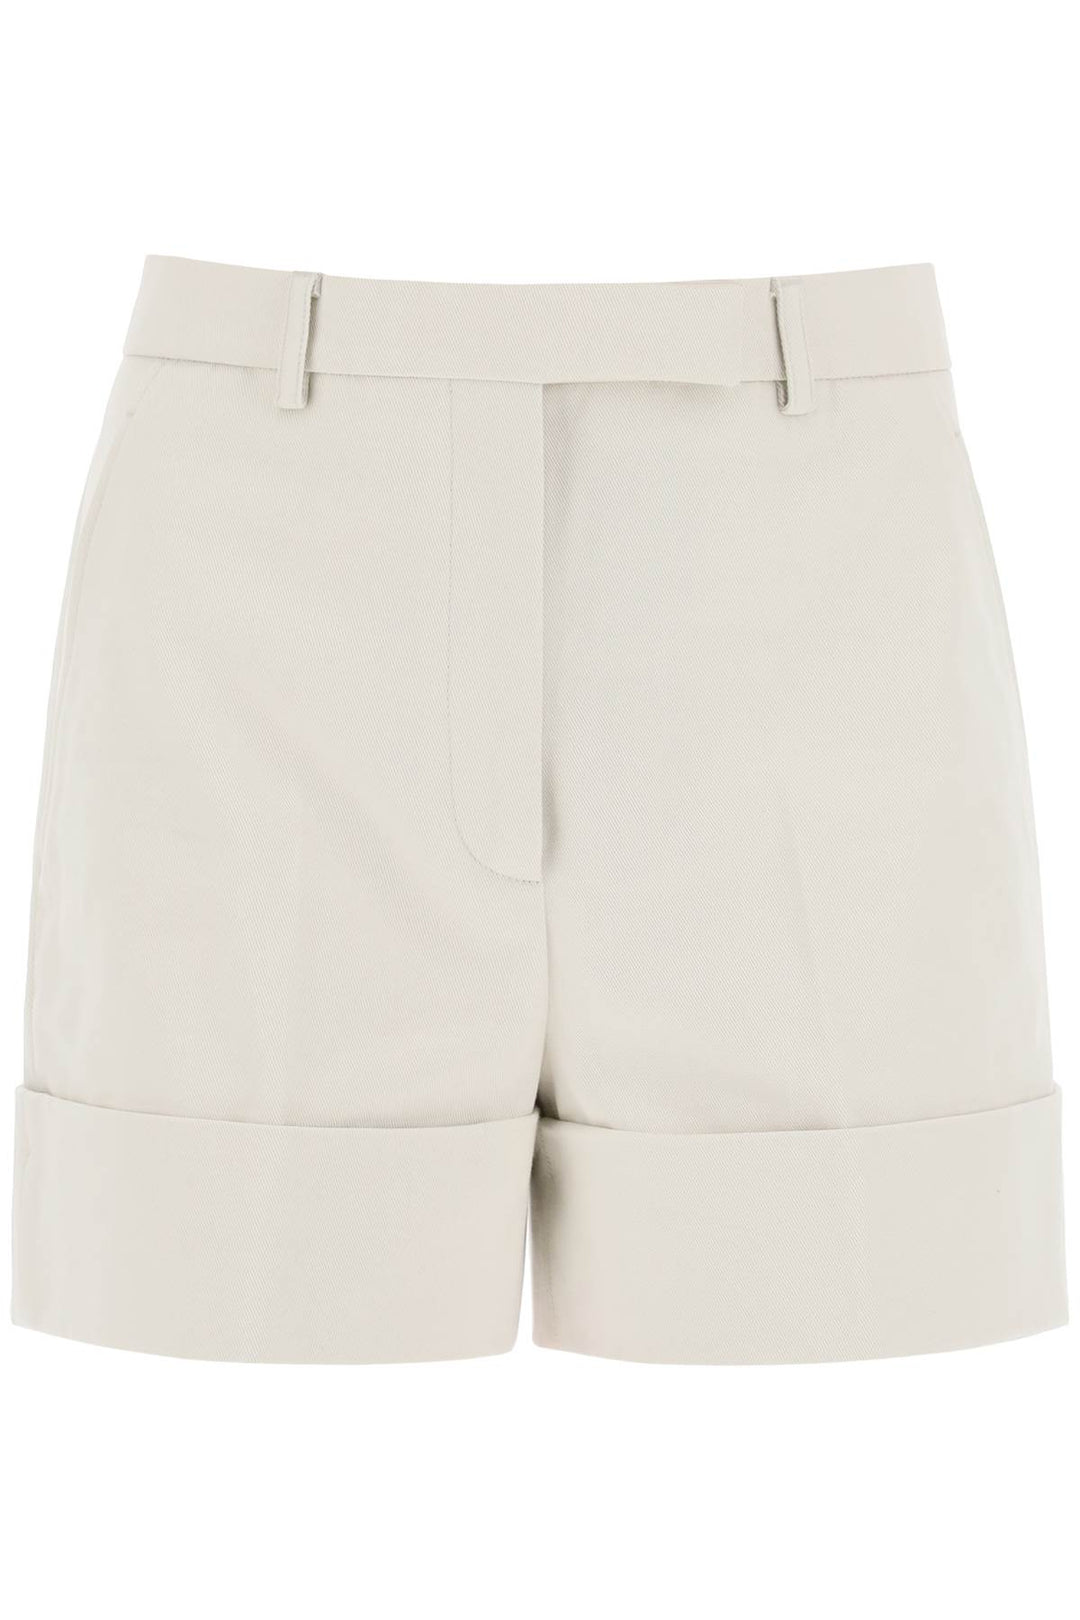 Thom browne shorts in cotton gabardine-0